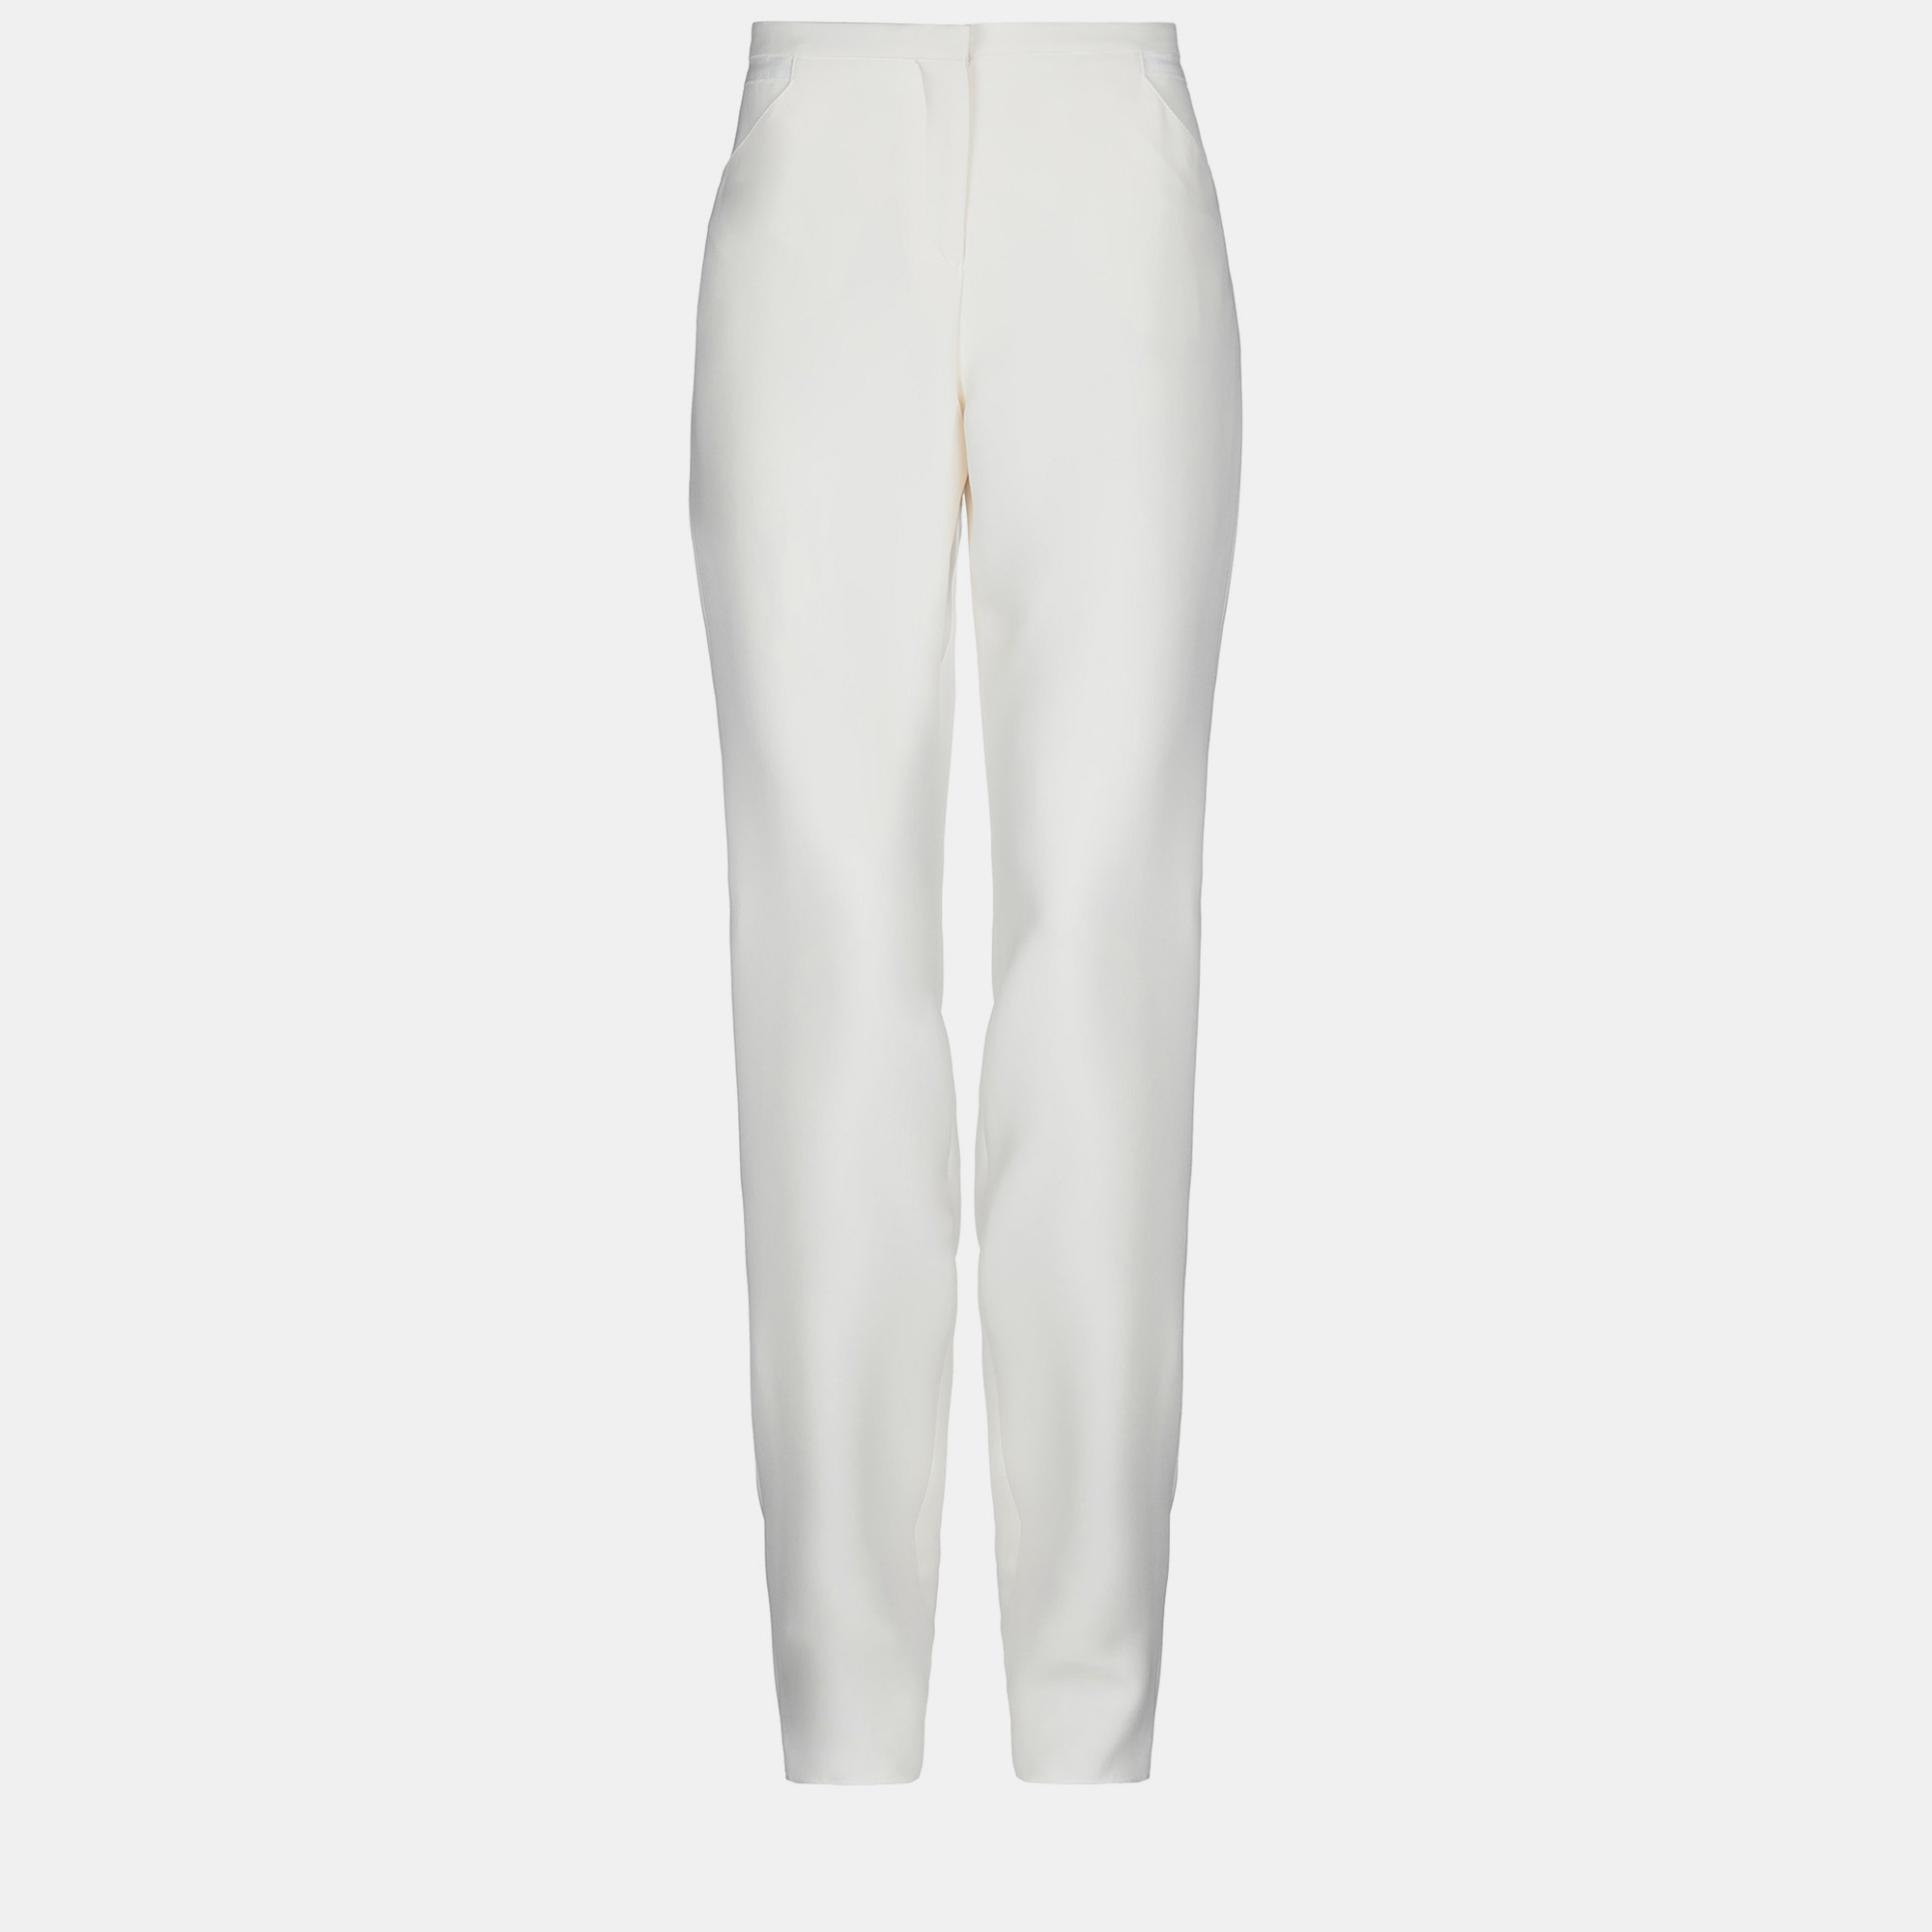 Giorgio armani cream silk tailored pants xl (it 46)